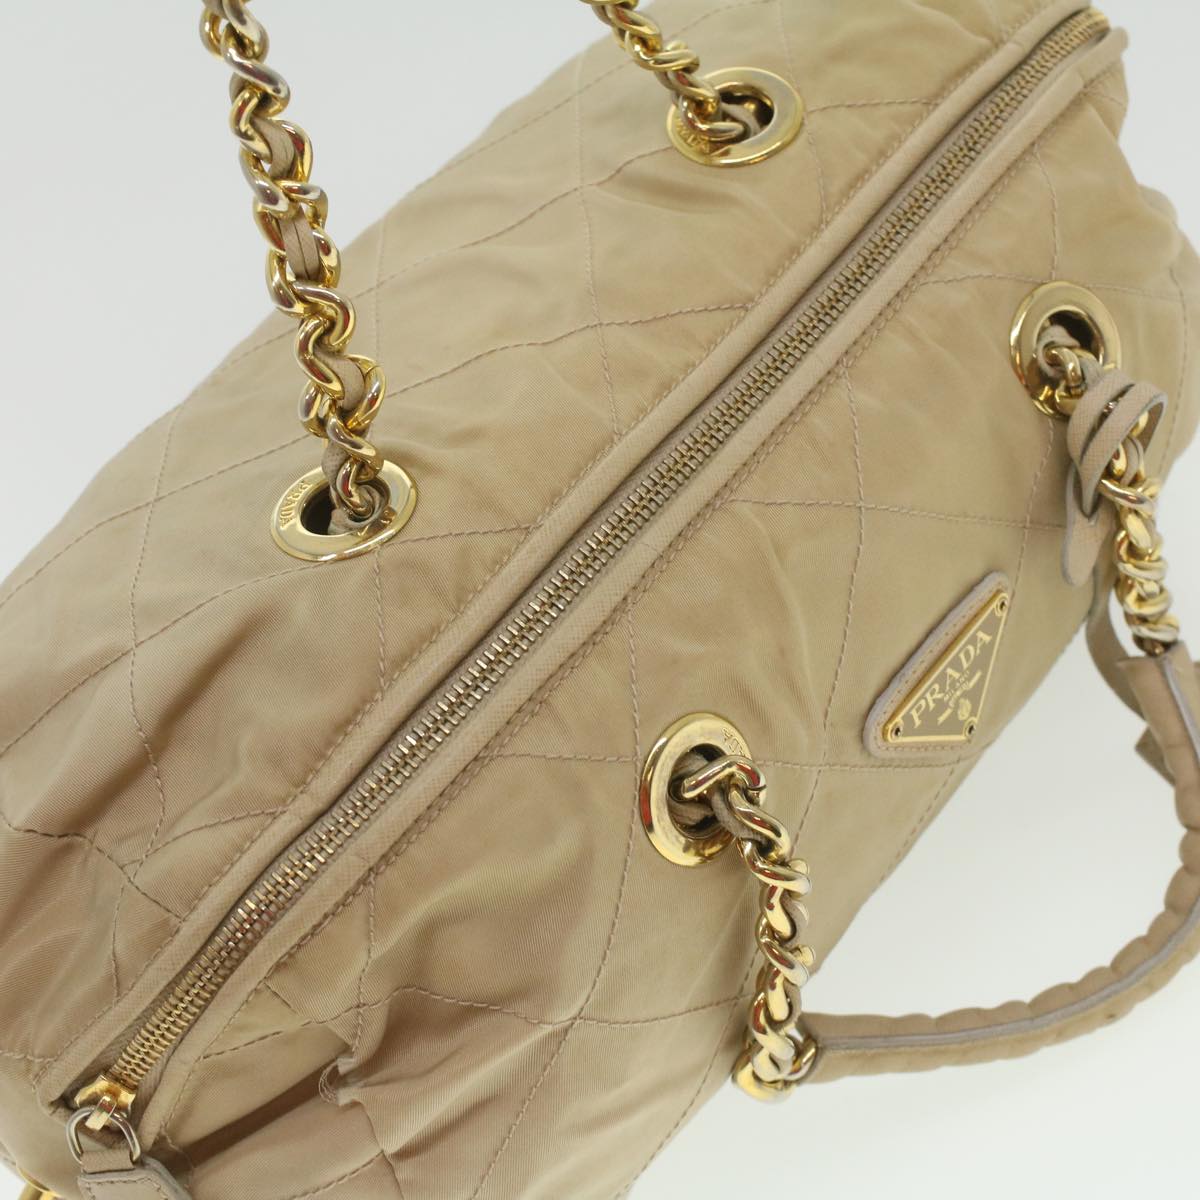 Leather - Nylon - Hardware - Shoulder - Bag - Gold - Logo - PRADA